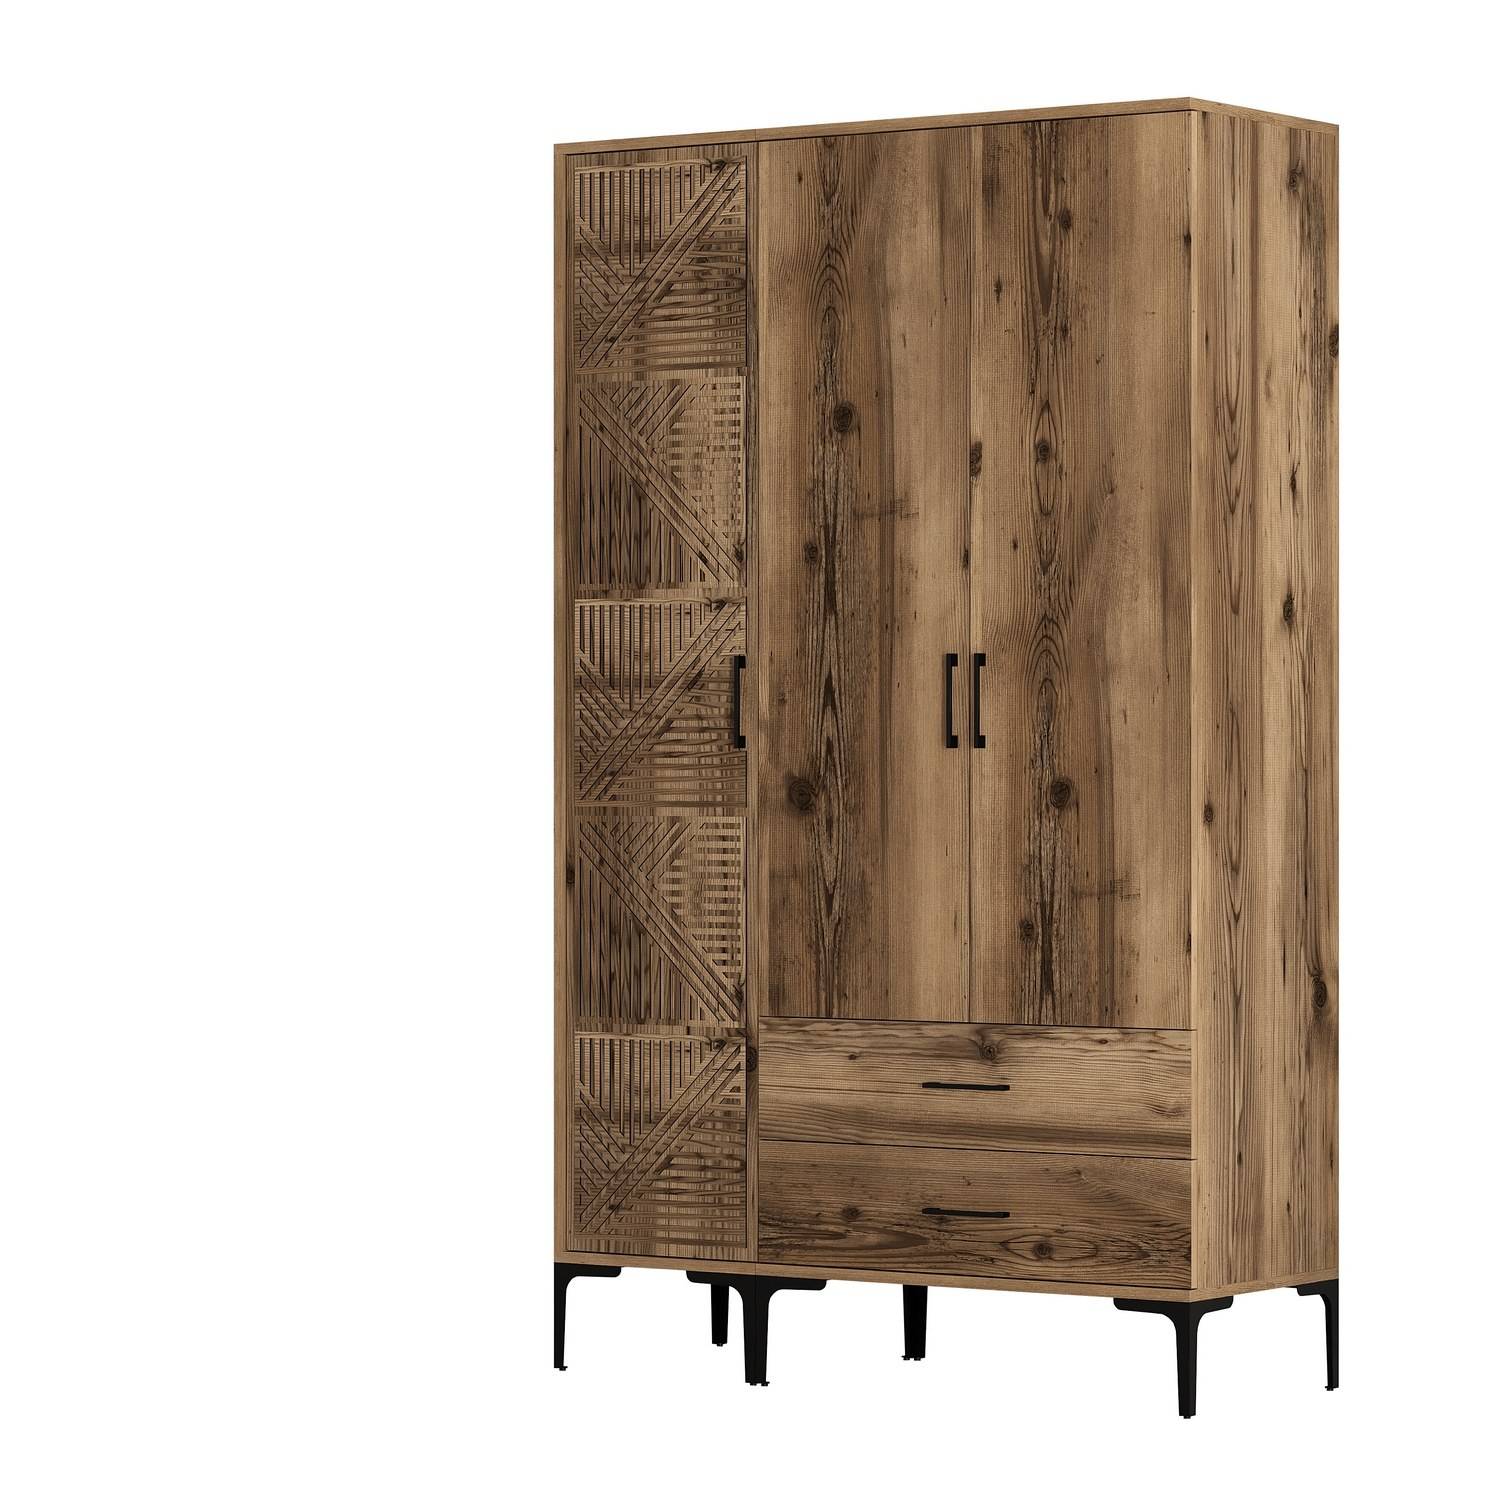 Akay kledingkast met deuren met geometrisch patroon en 2 laden in industriële stijl L120cm Donker hout